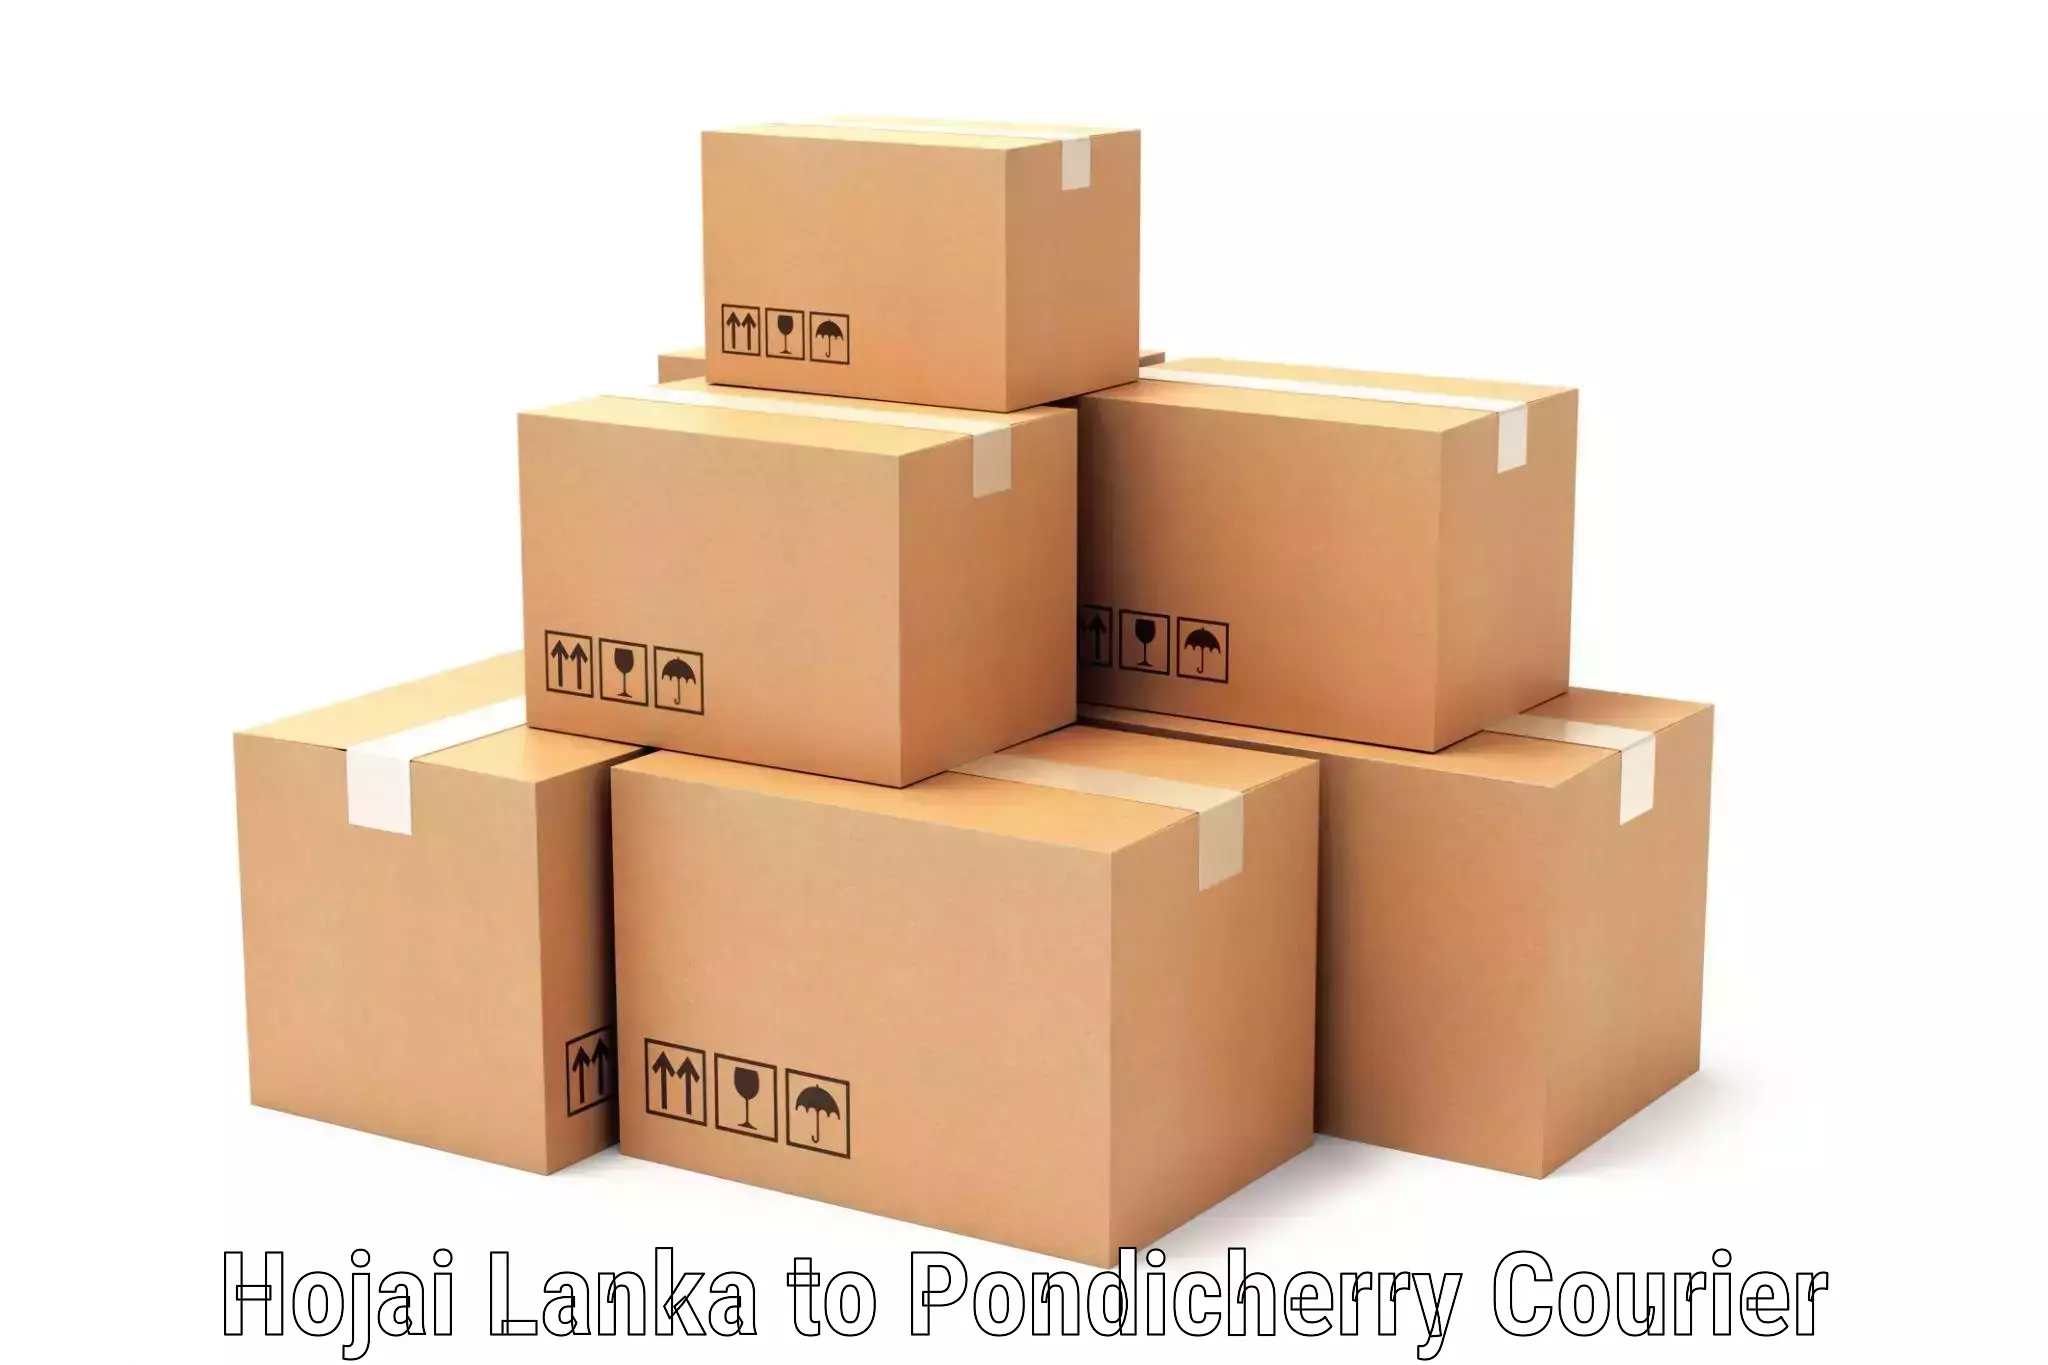 Overnight delivery services Hojai Lanka to Pondicherry